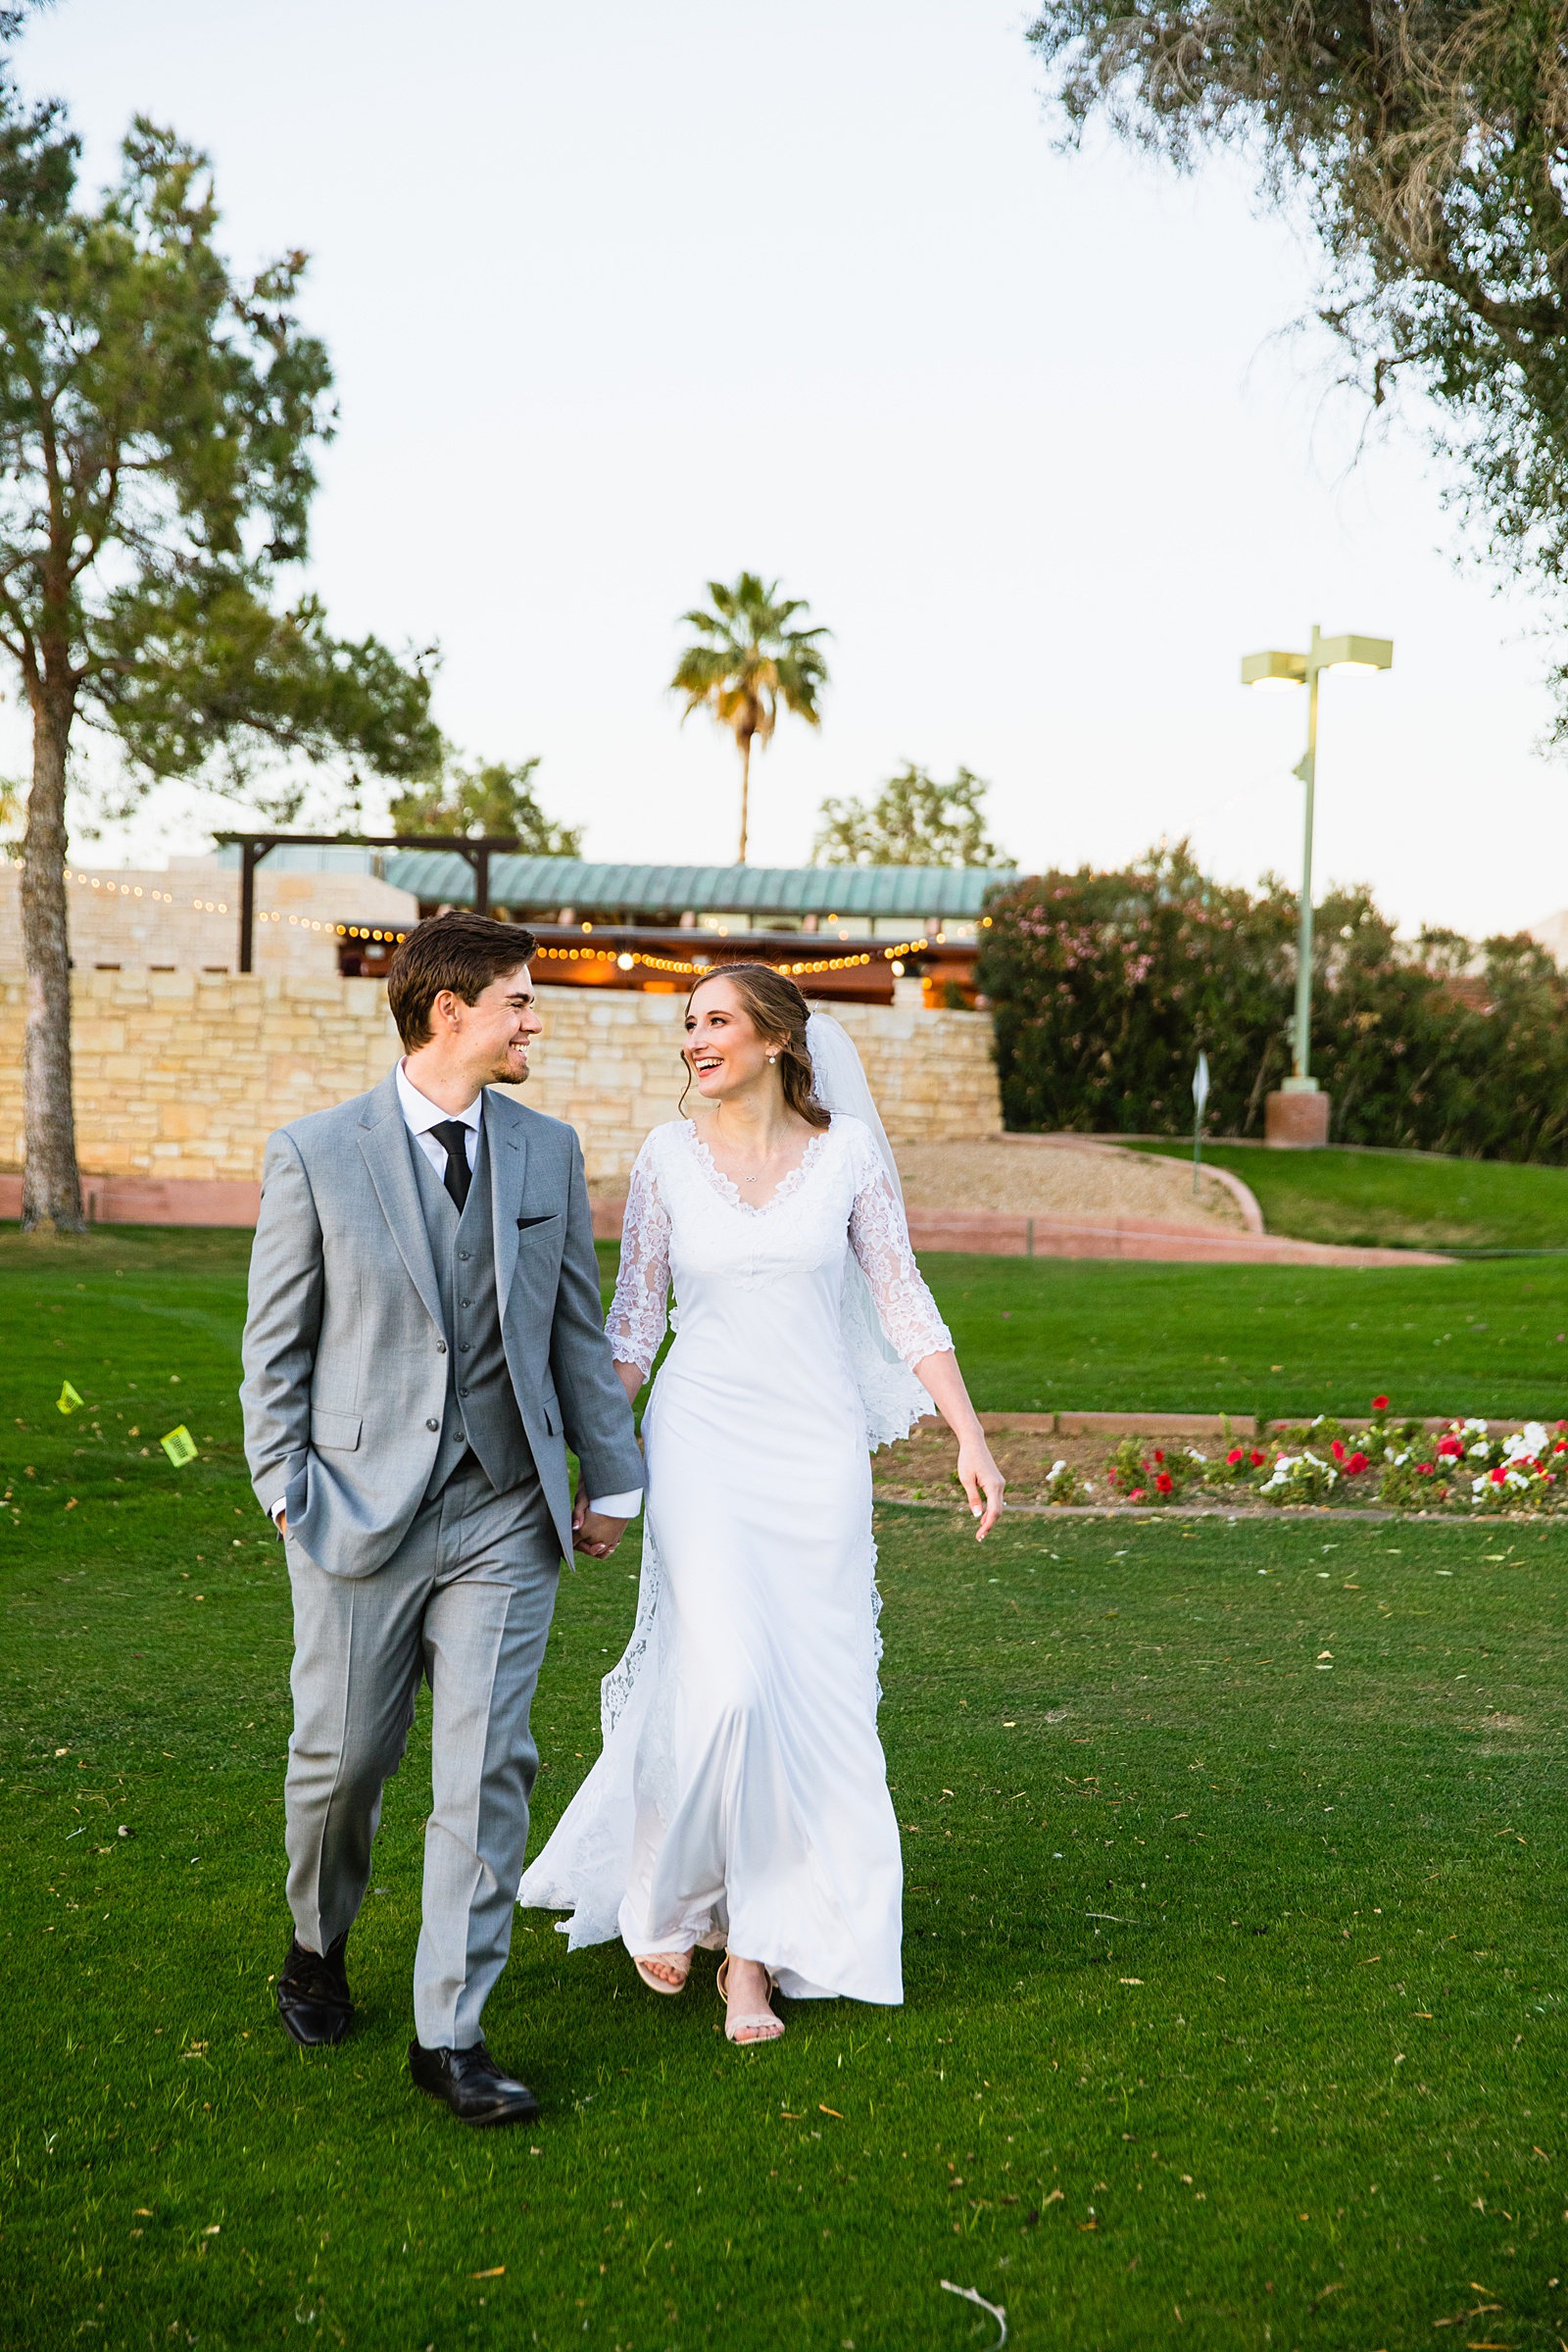 Newlyweds walking together during their Ocotillo Oasis wedding by Arizona wedding photographer PMA Photography.